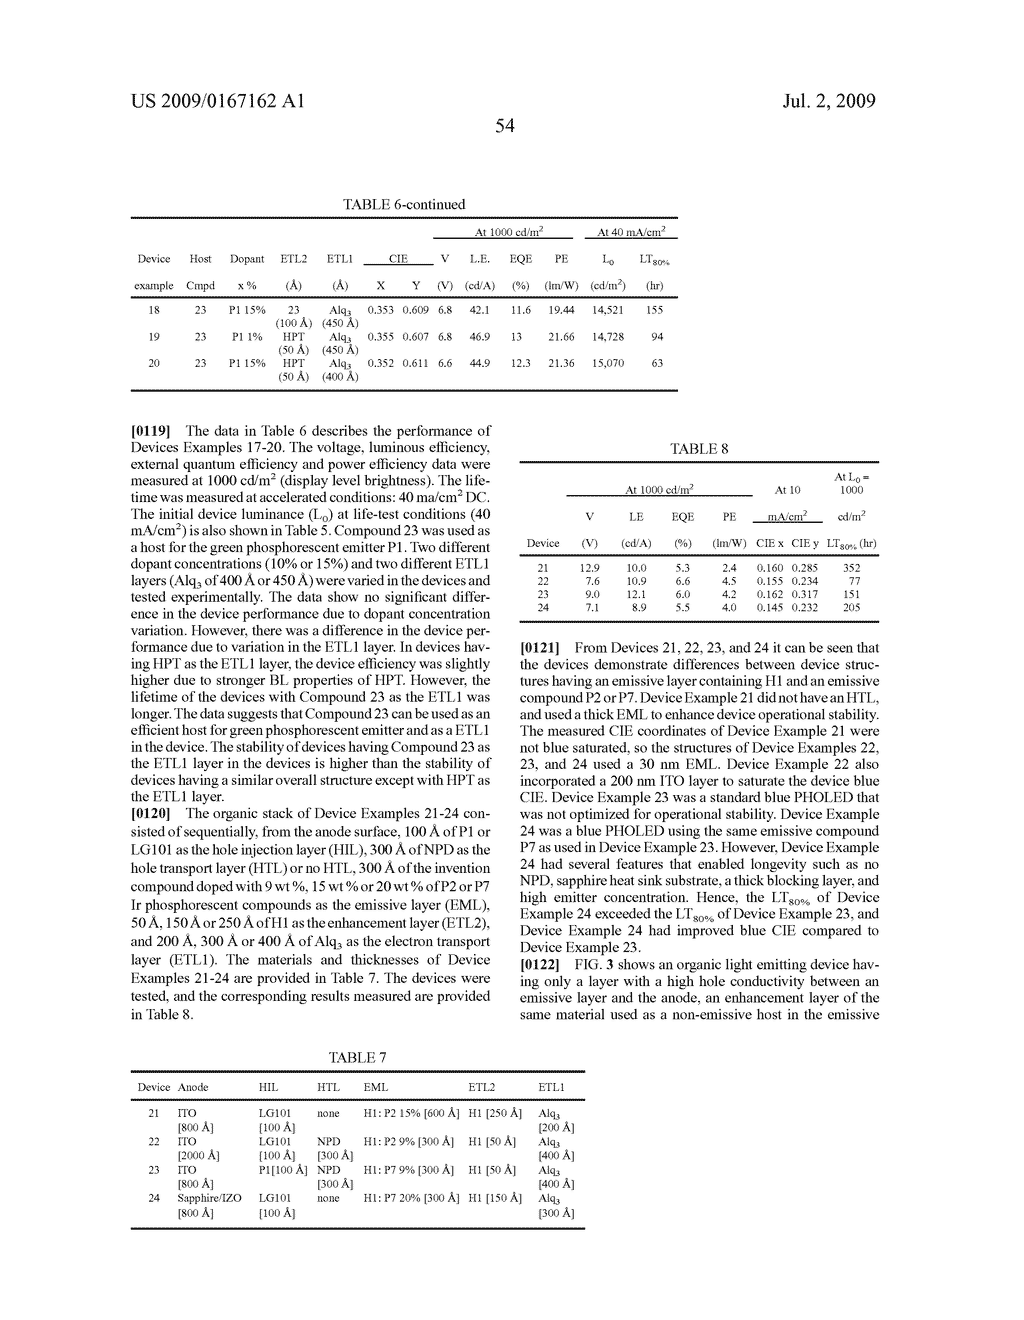 DIBENZOTHIOPHENE-CONTAINING MATERIALS IN PHOSPHORESCENT LIGHT EMITTING DIODES - diagram, schematic, and image 69